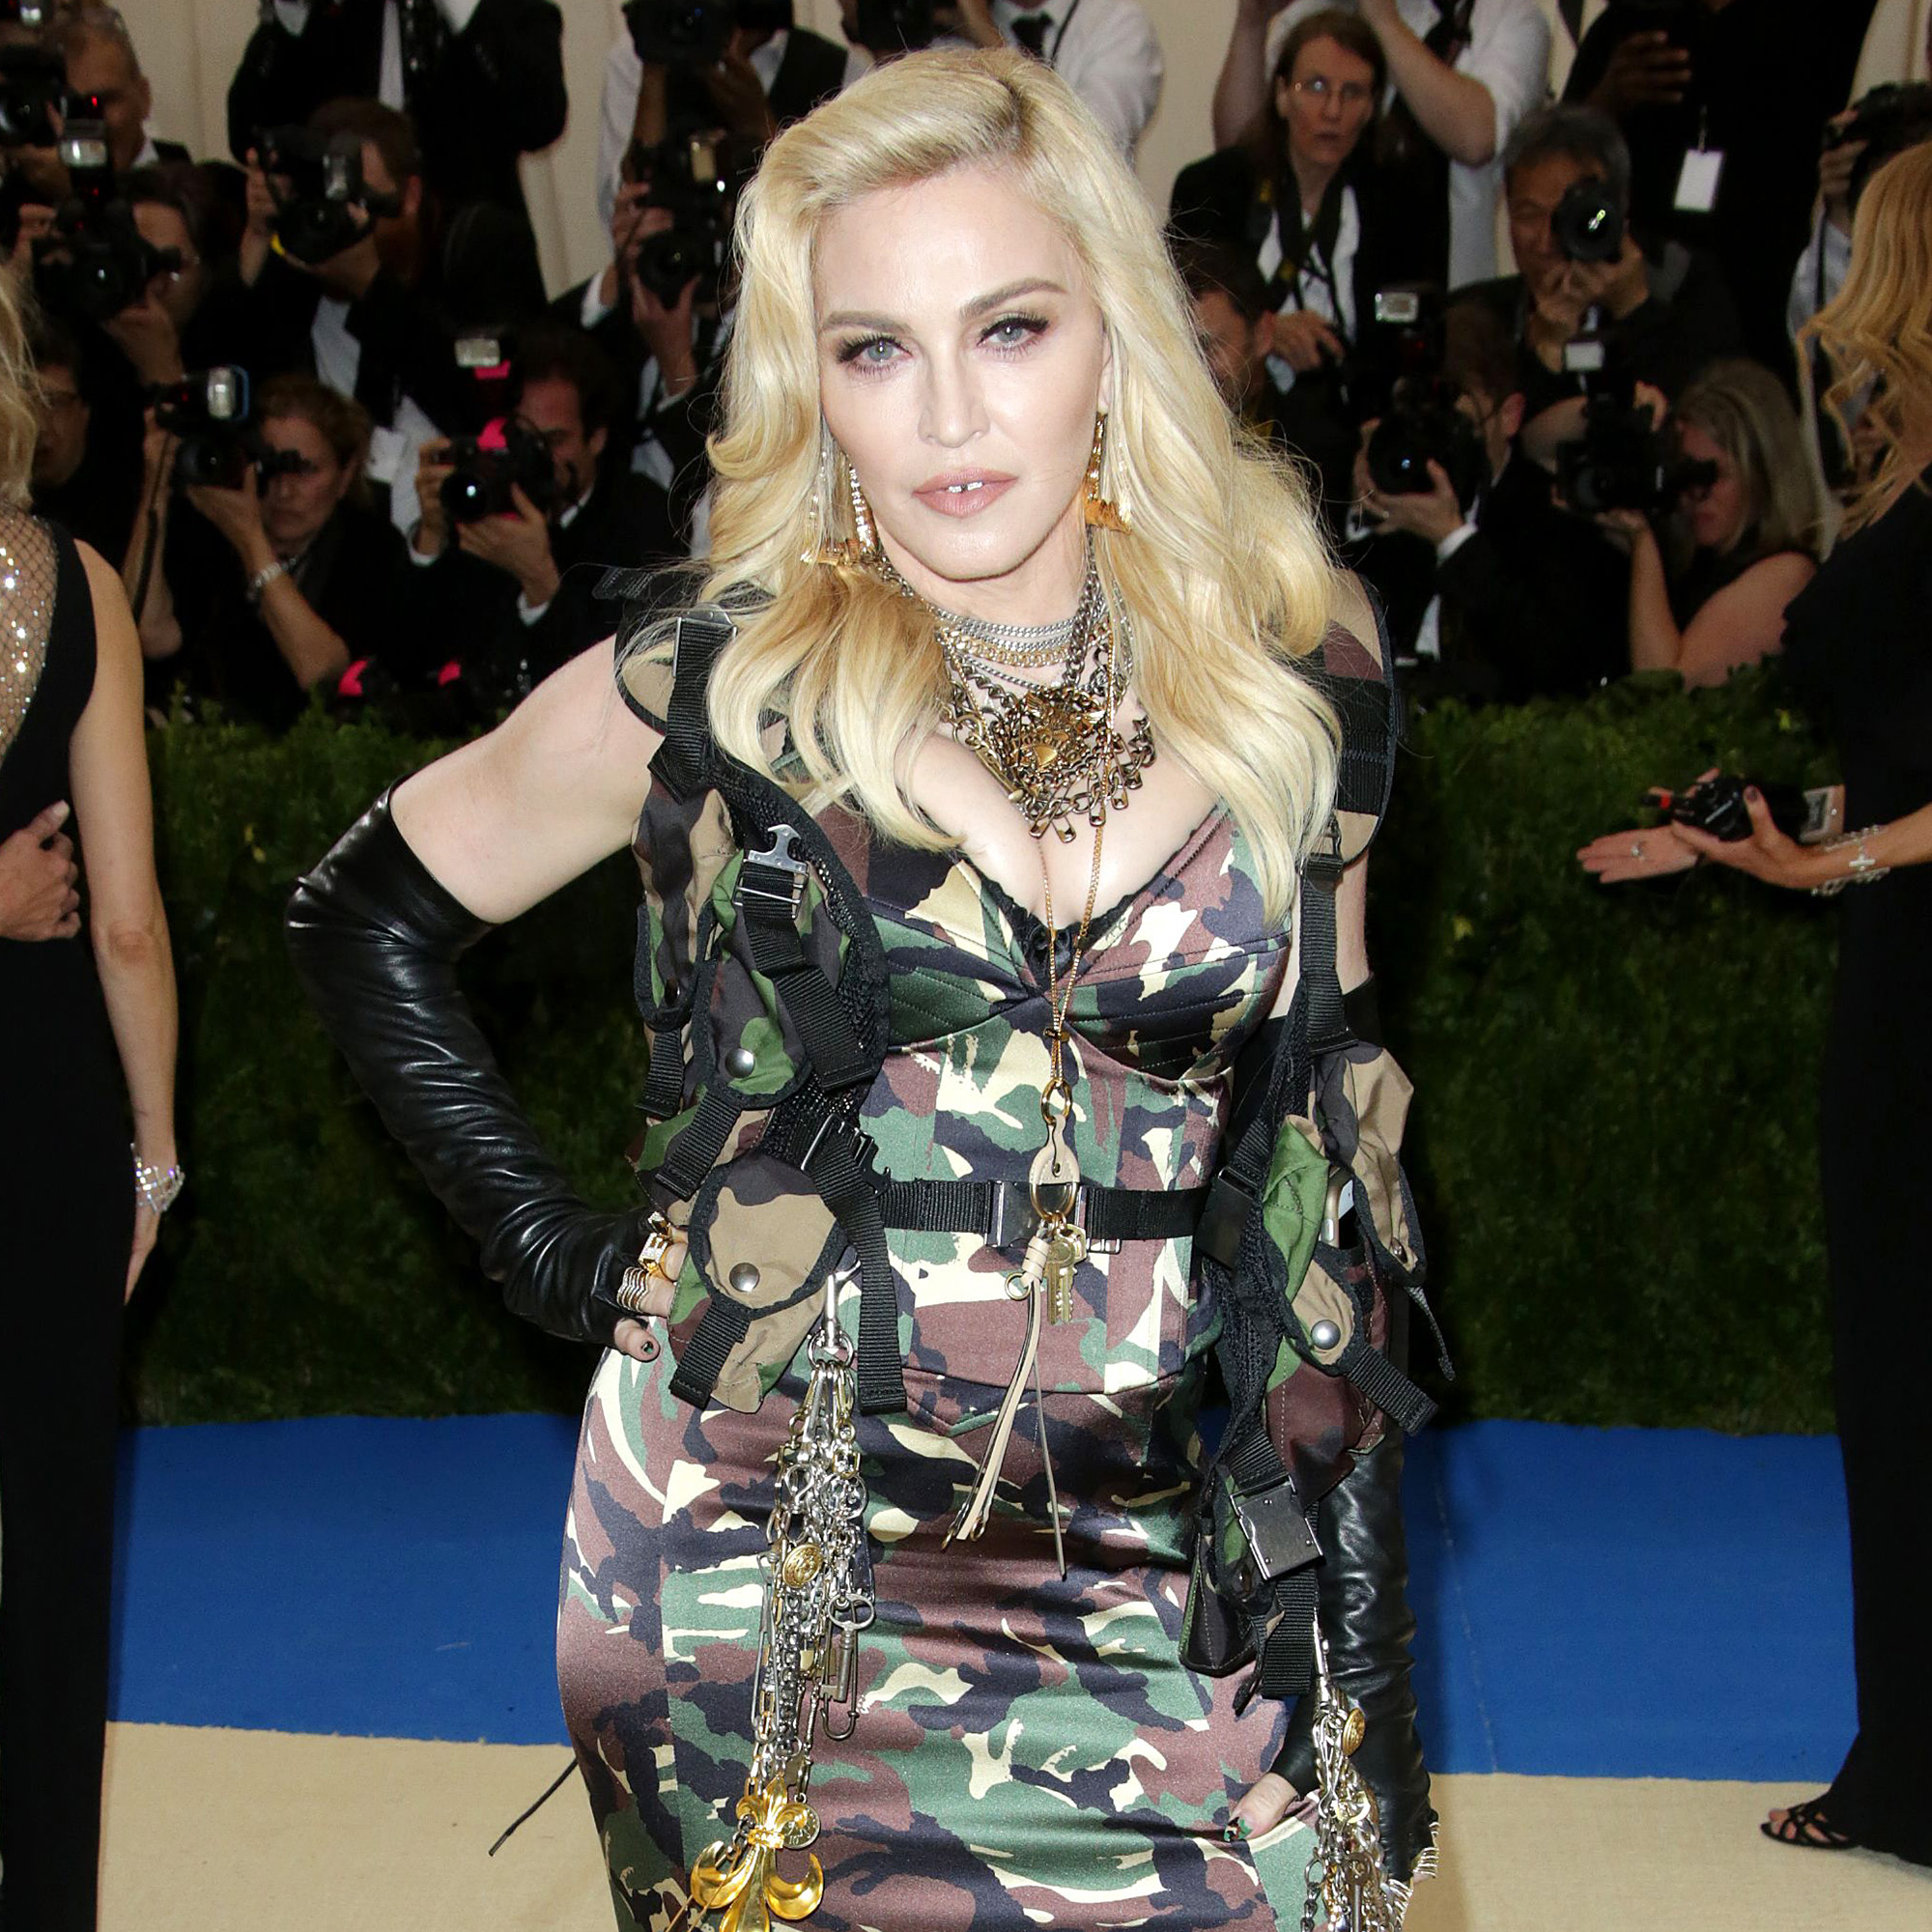 Madonna Debuts Tree of Life Tattoo Her Wrist: Photo